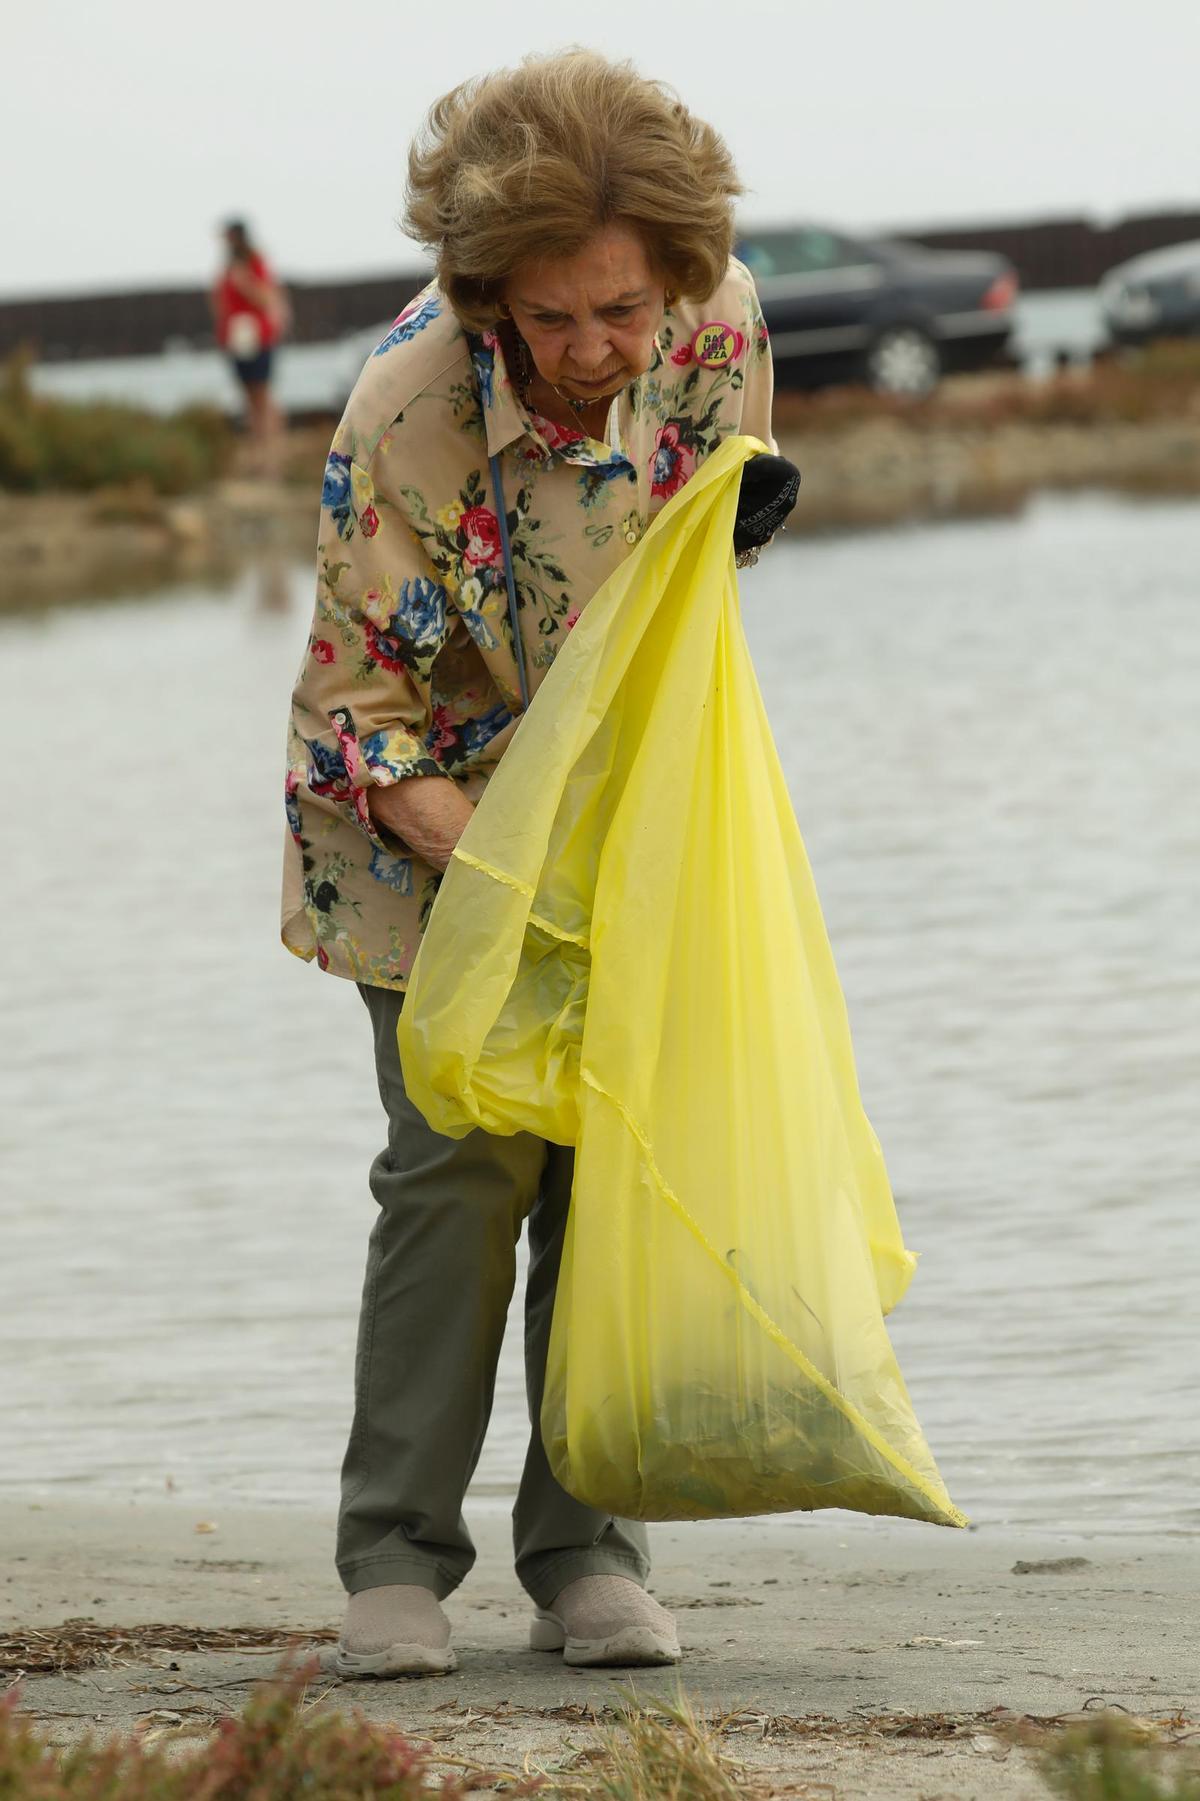 La reina Sofía recoge basura en el arenal de La Manga